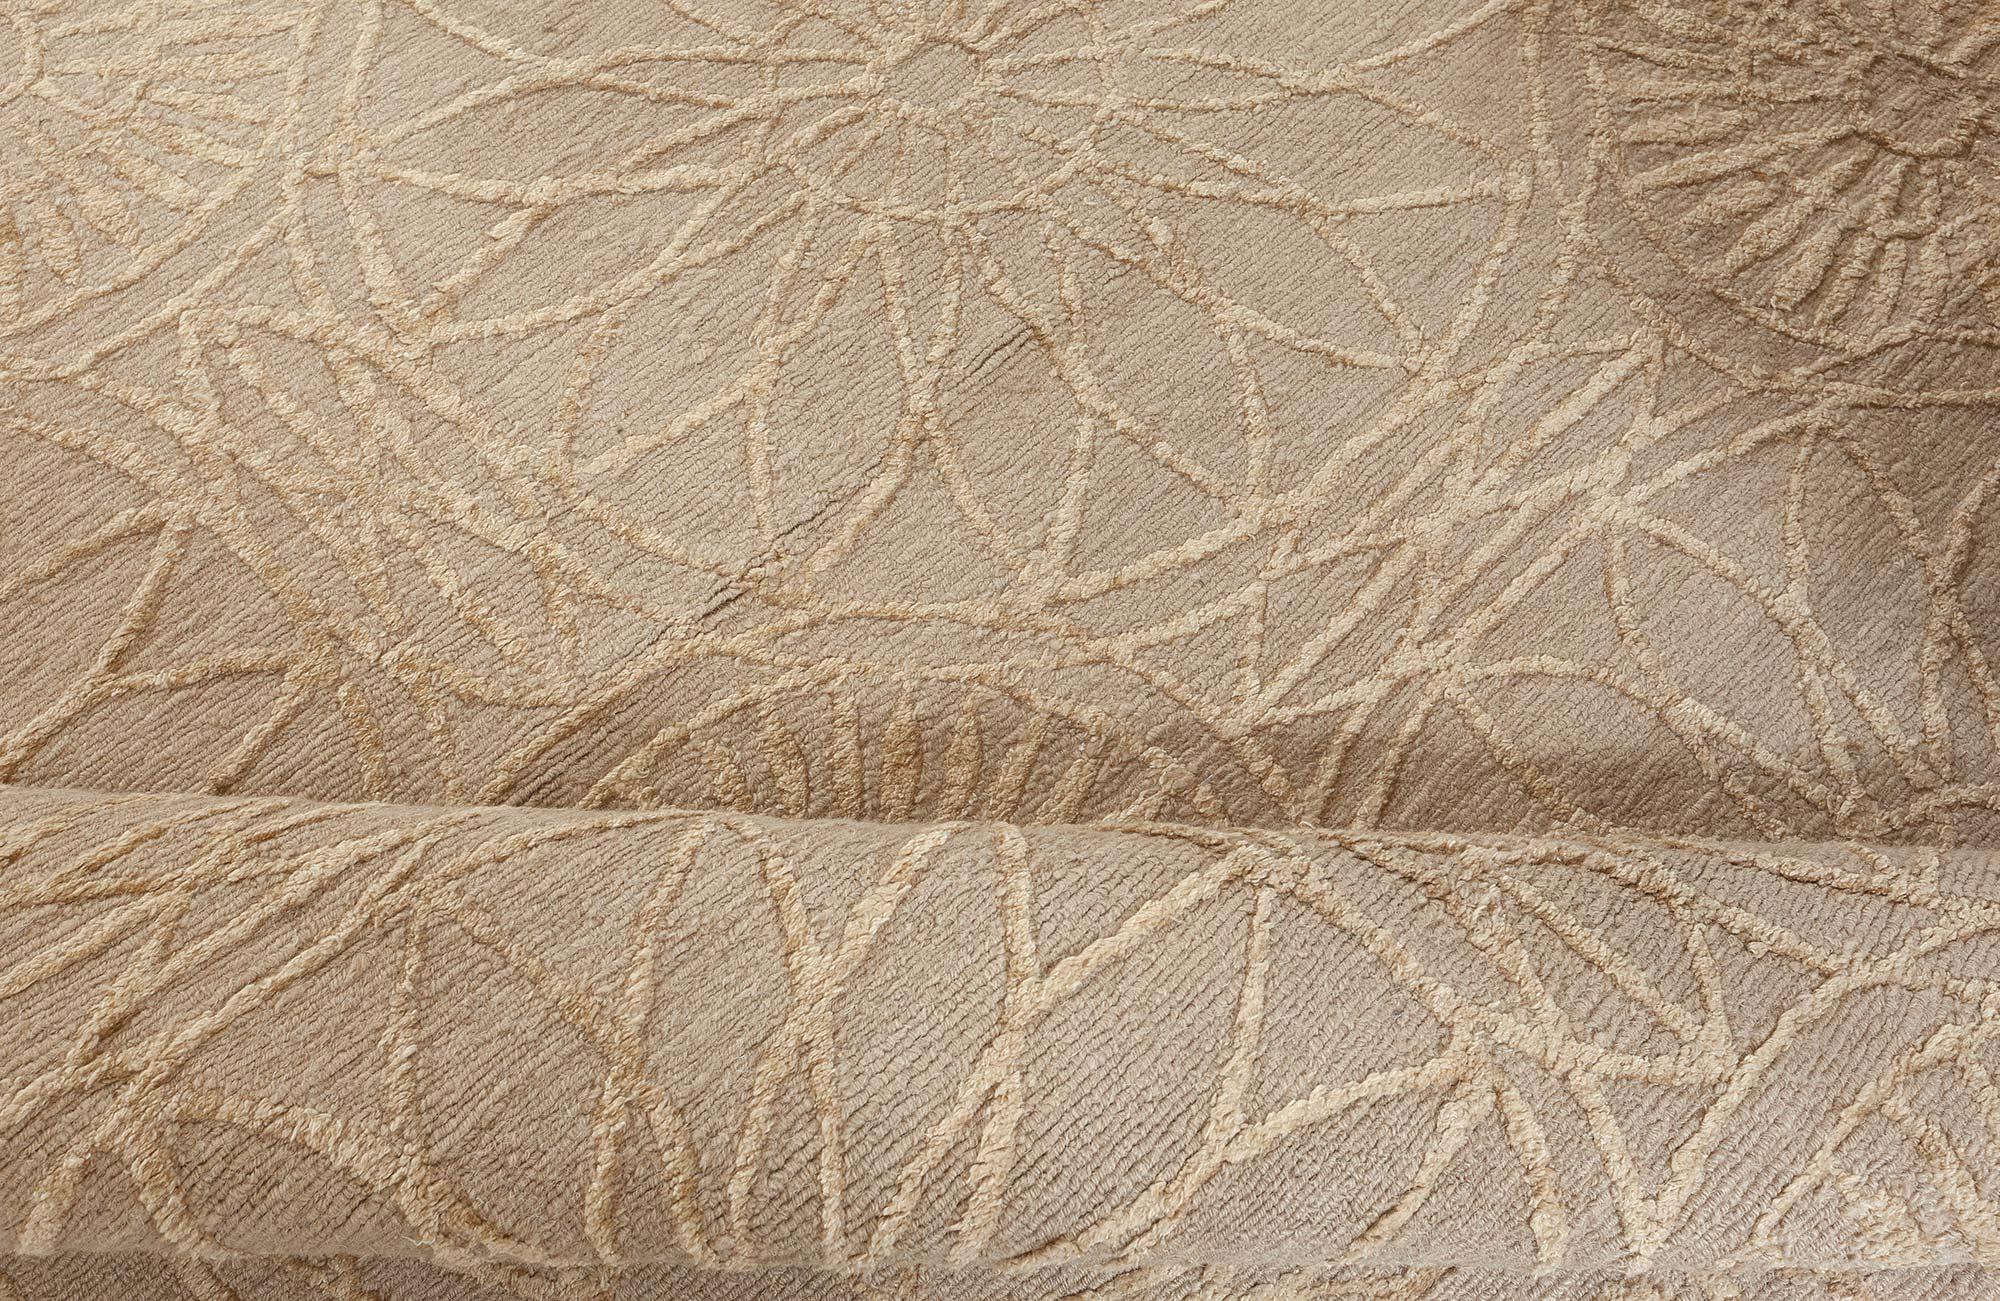 Contemporary Flower Garden Beige Silk rug by Suzanne Lovell for Doris Leslie Blau
Size: 9'0